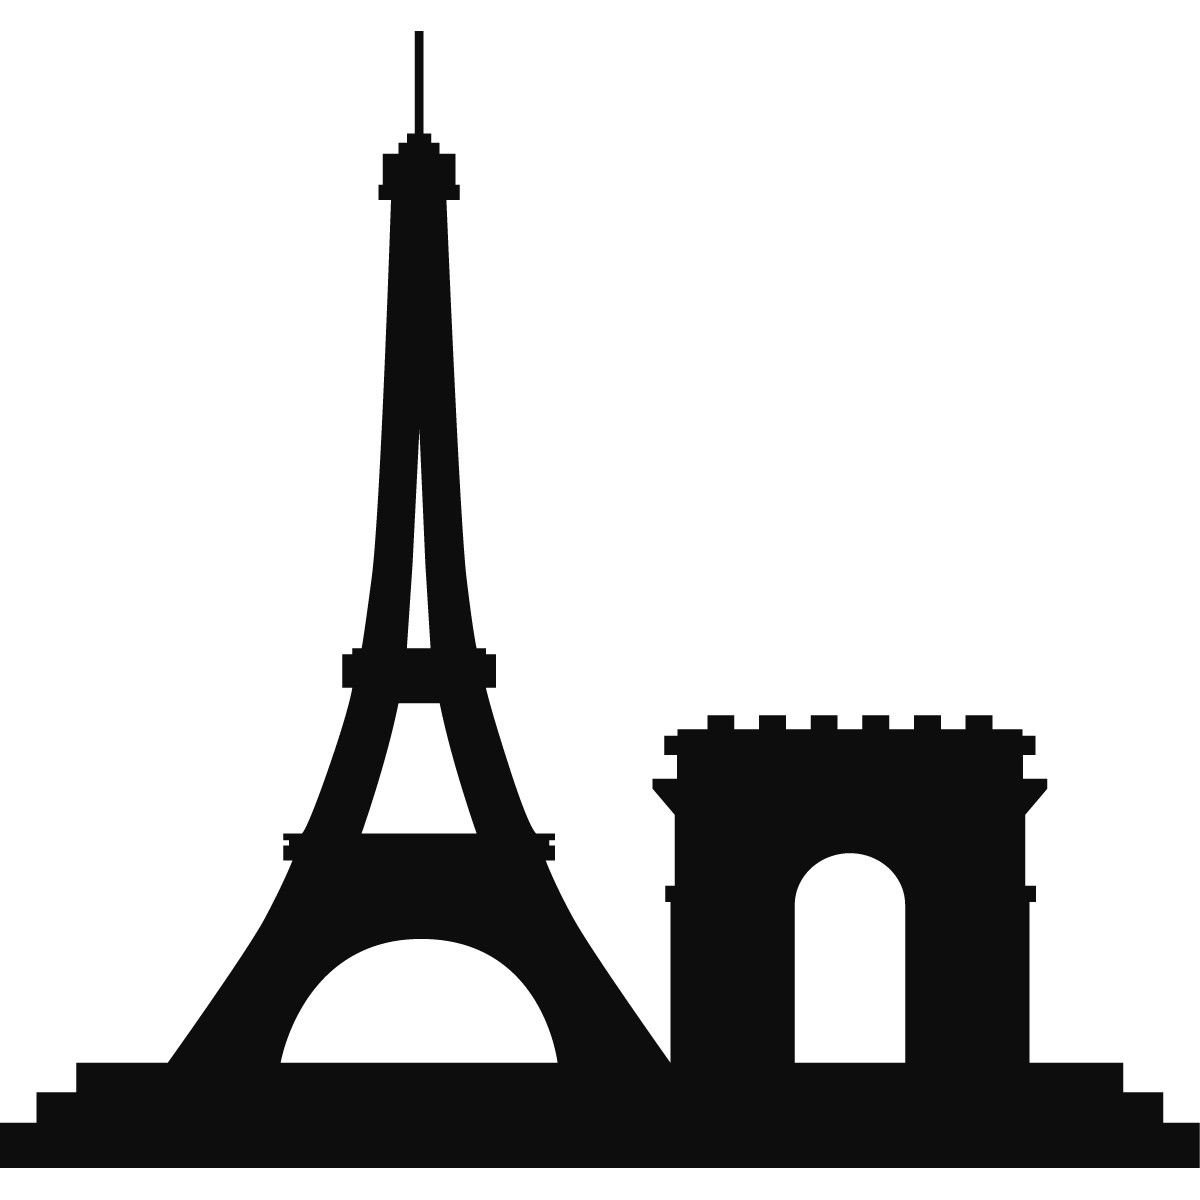 A symbol of paris. Париж эфьливая башня Vektor. Эйфель башня siluet. Париж Эйфелева башня вектор. Эйфелева башня в Париже силуэт.